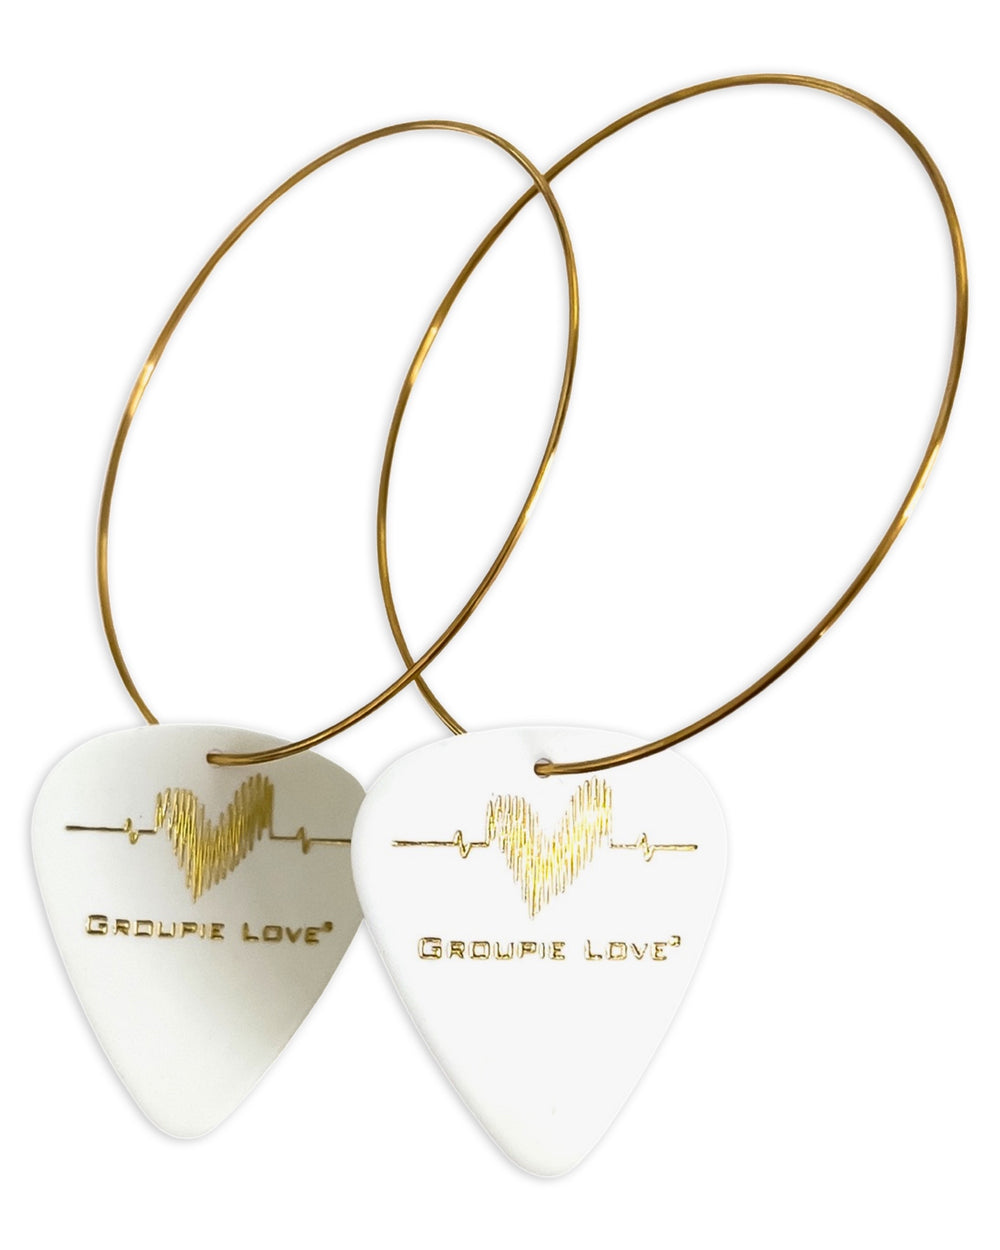 WS Groupie Love White Gold Single Guitar Pick Earrings